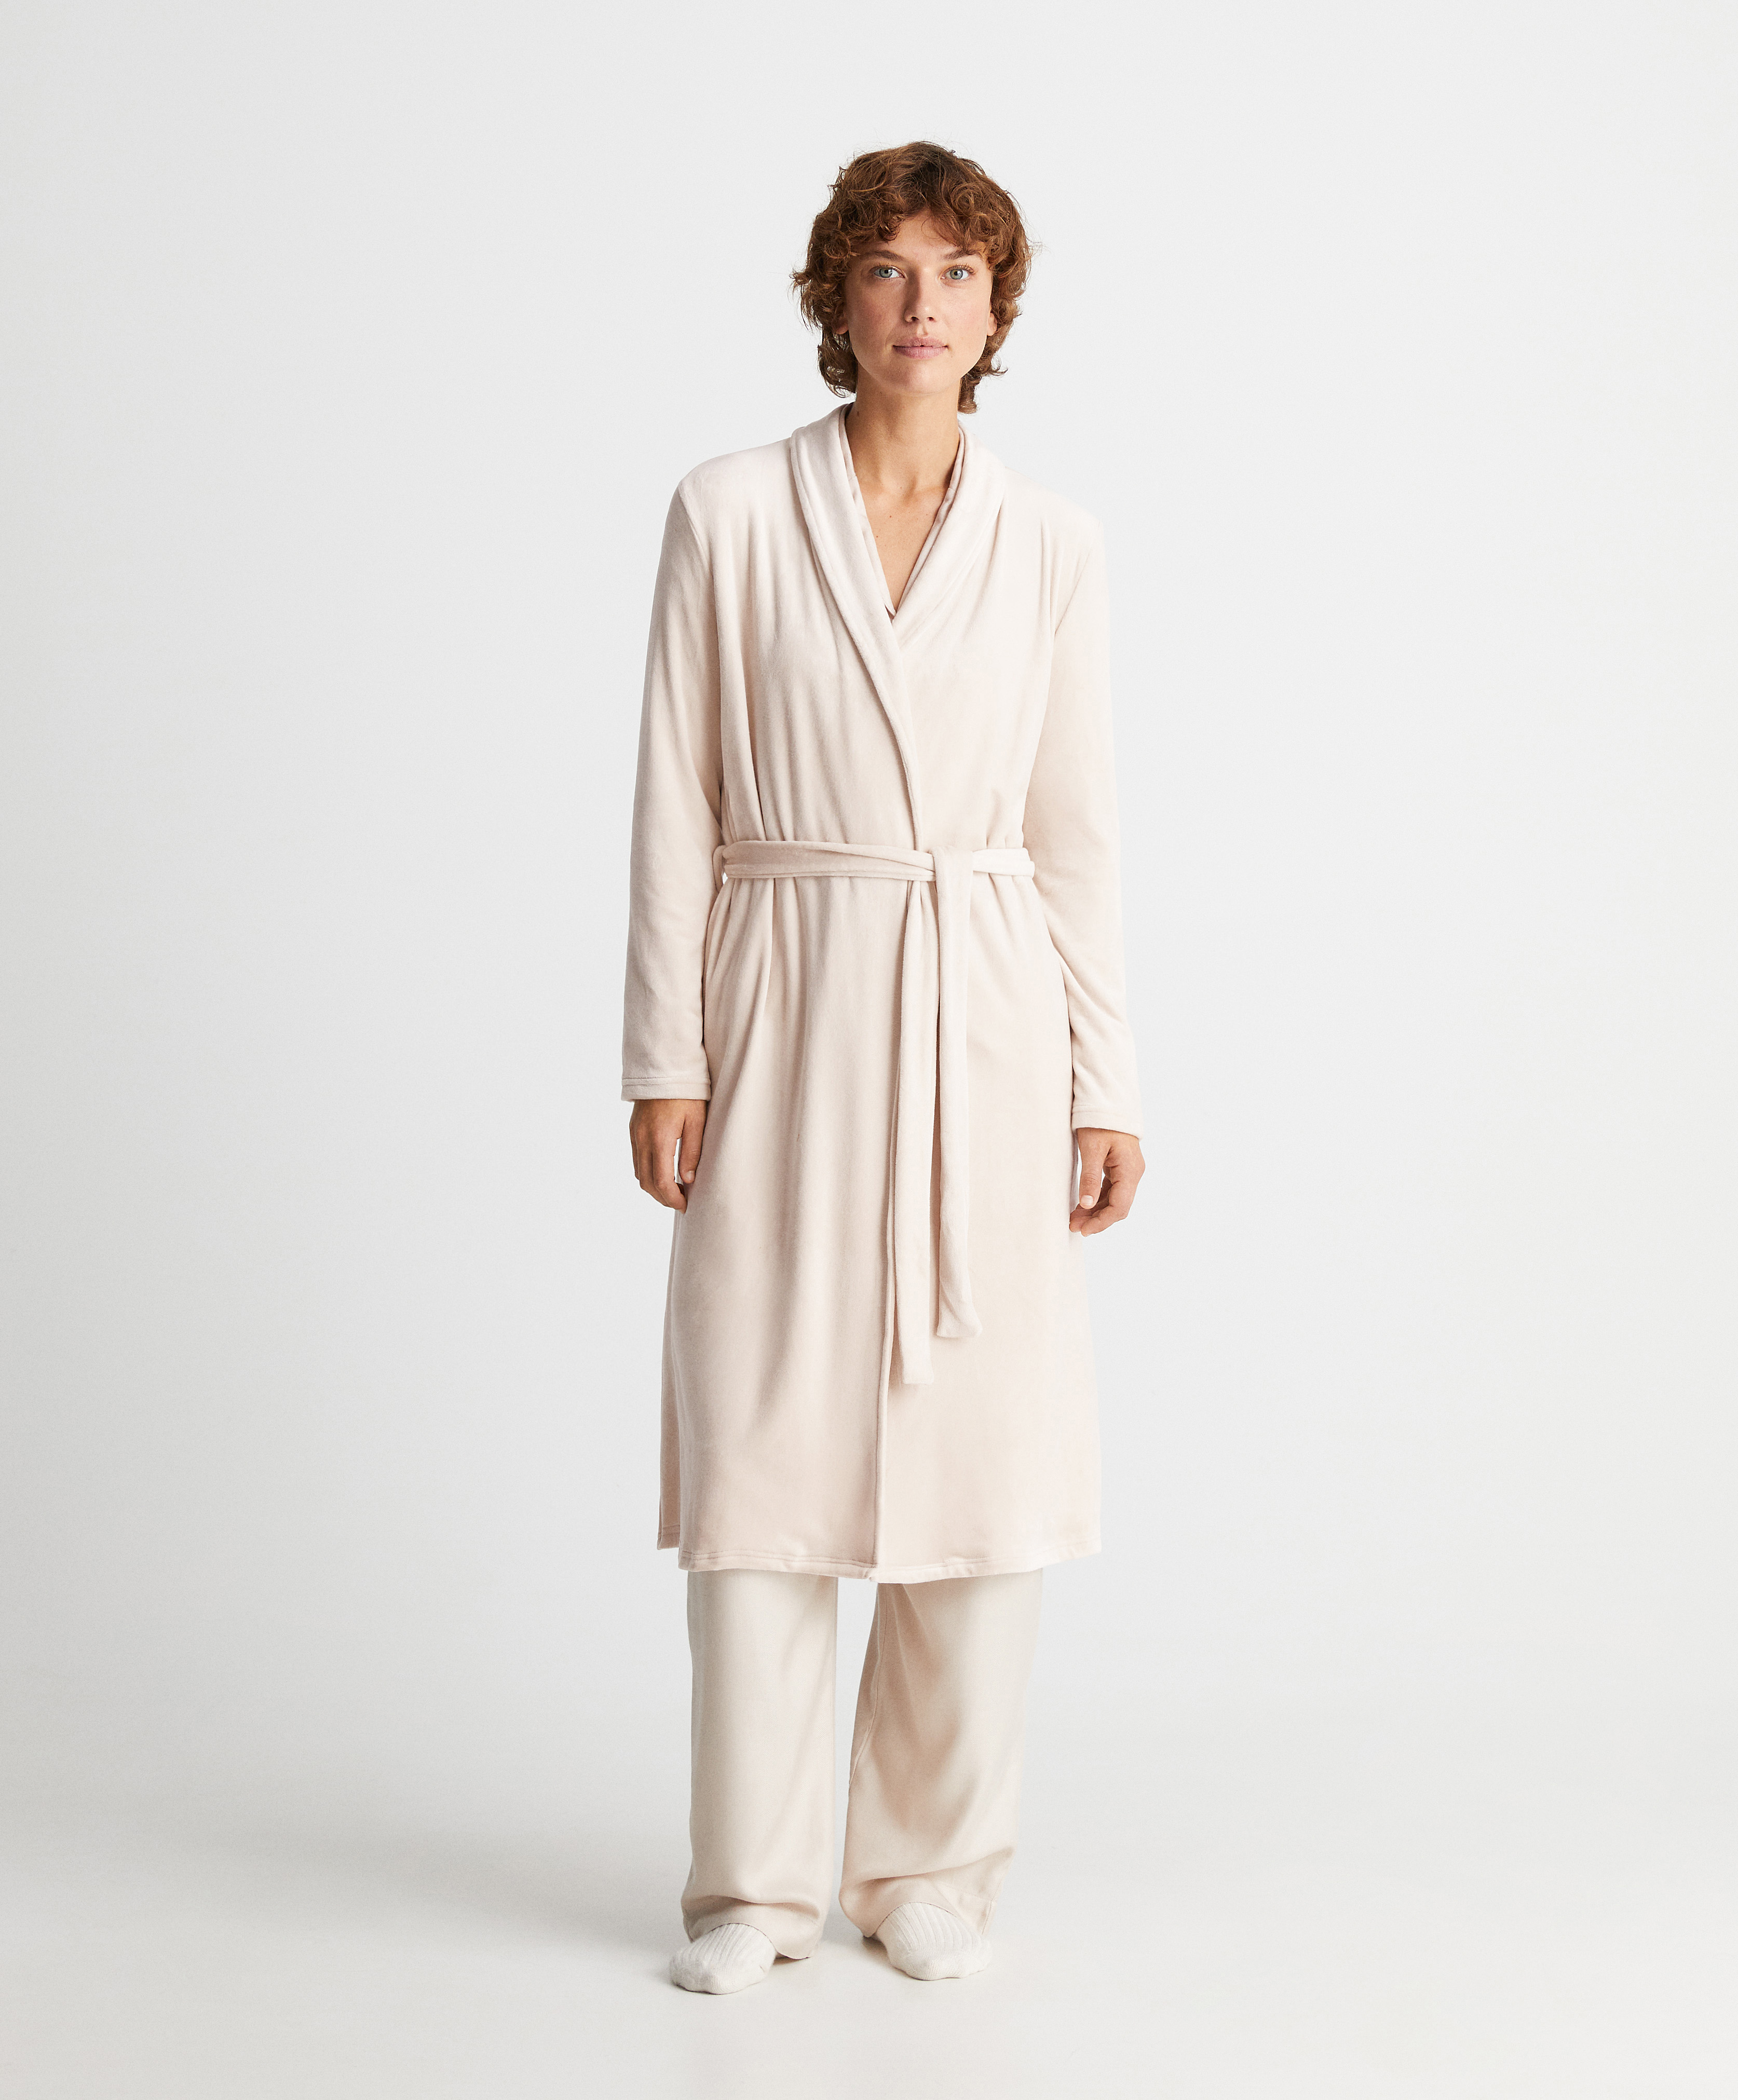 Sykooria Womens Lightweight Cotton Knit V Neck Long Kimono Robes Bathrobe Soft Sleepwear Loungewear Pocket Dressing Gown for Women 